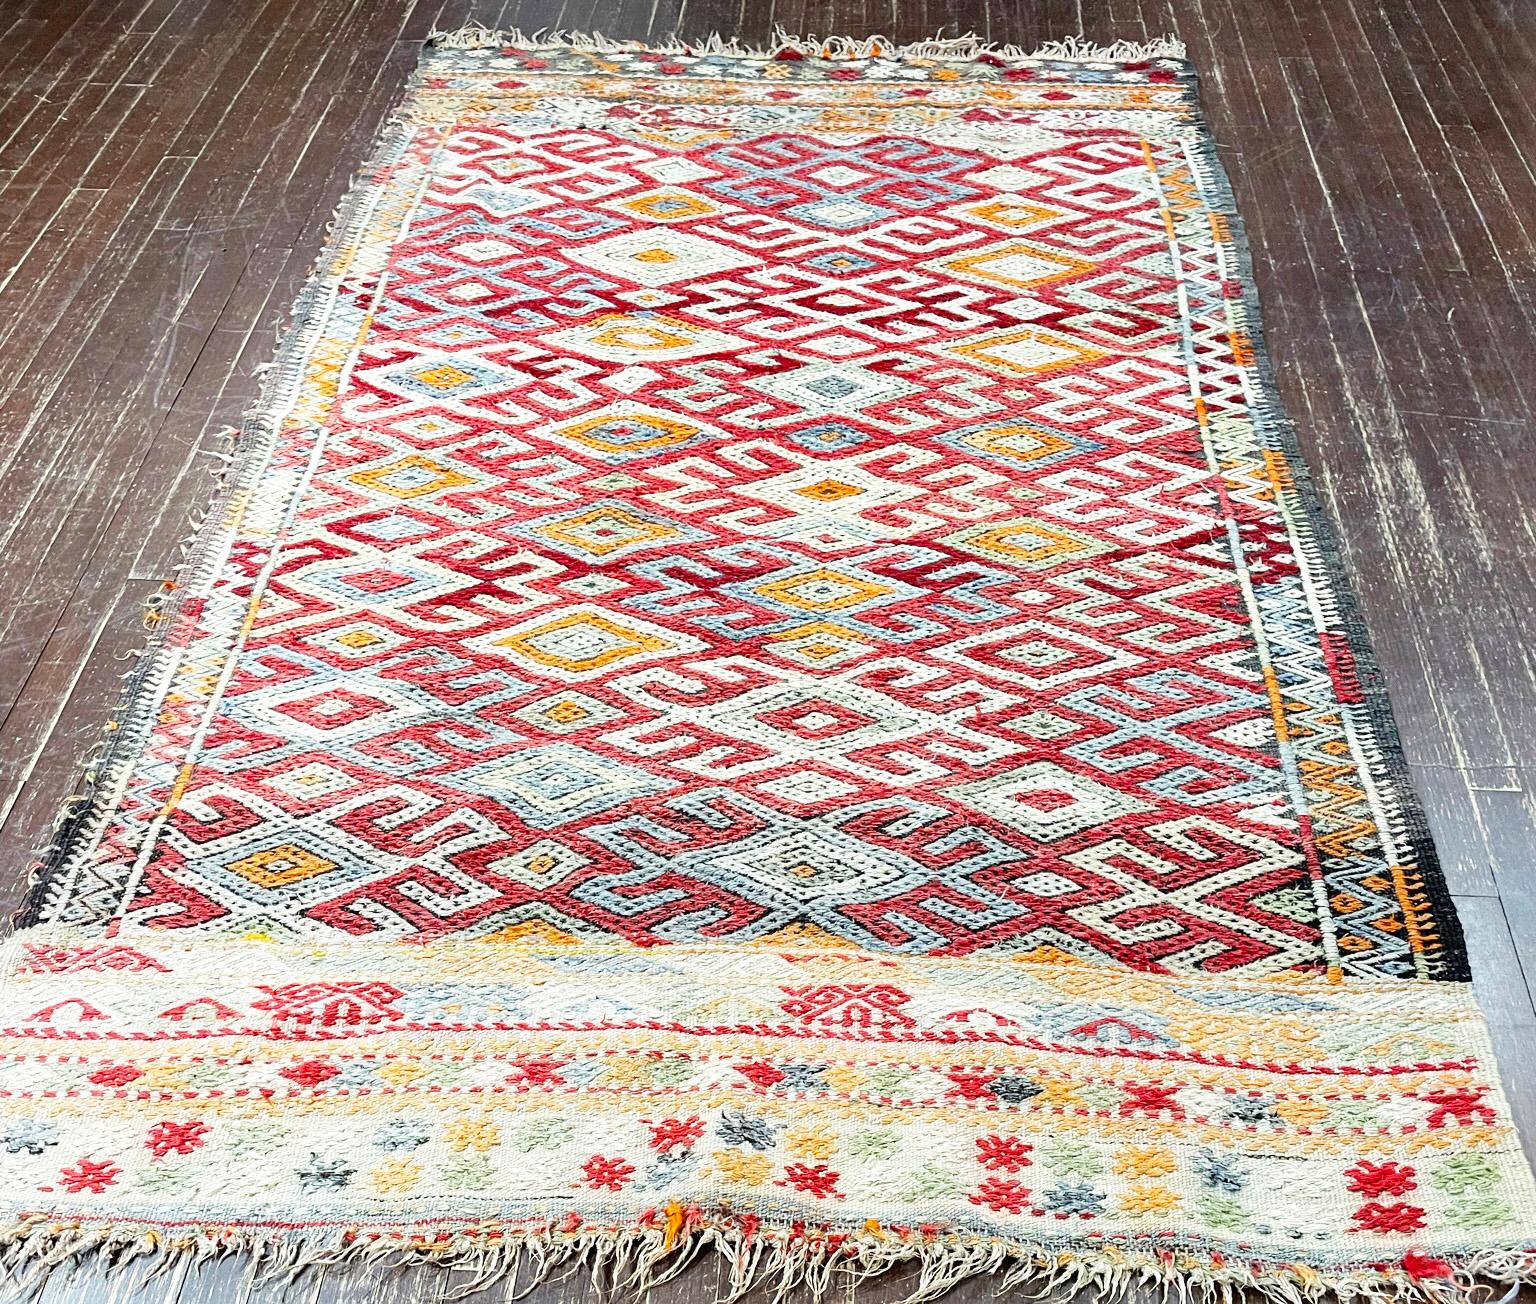 Vintage handmade tribal flat weave/kilim moroccan runner, circa -1950,measures: 4'9